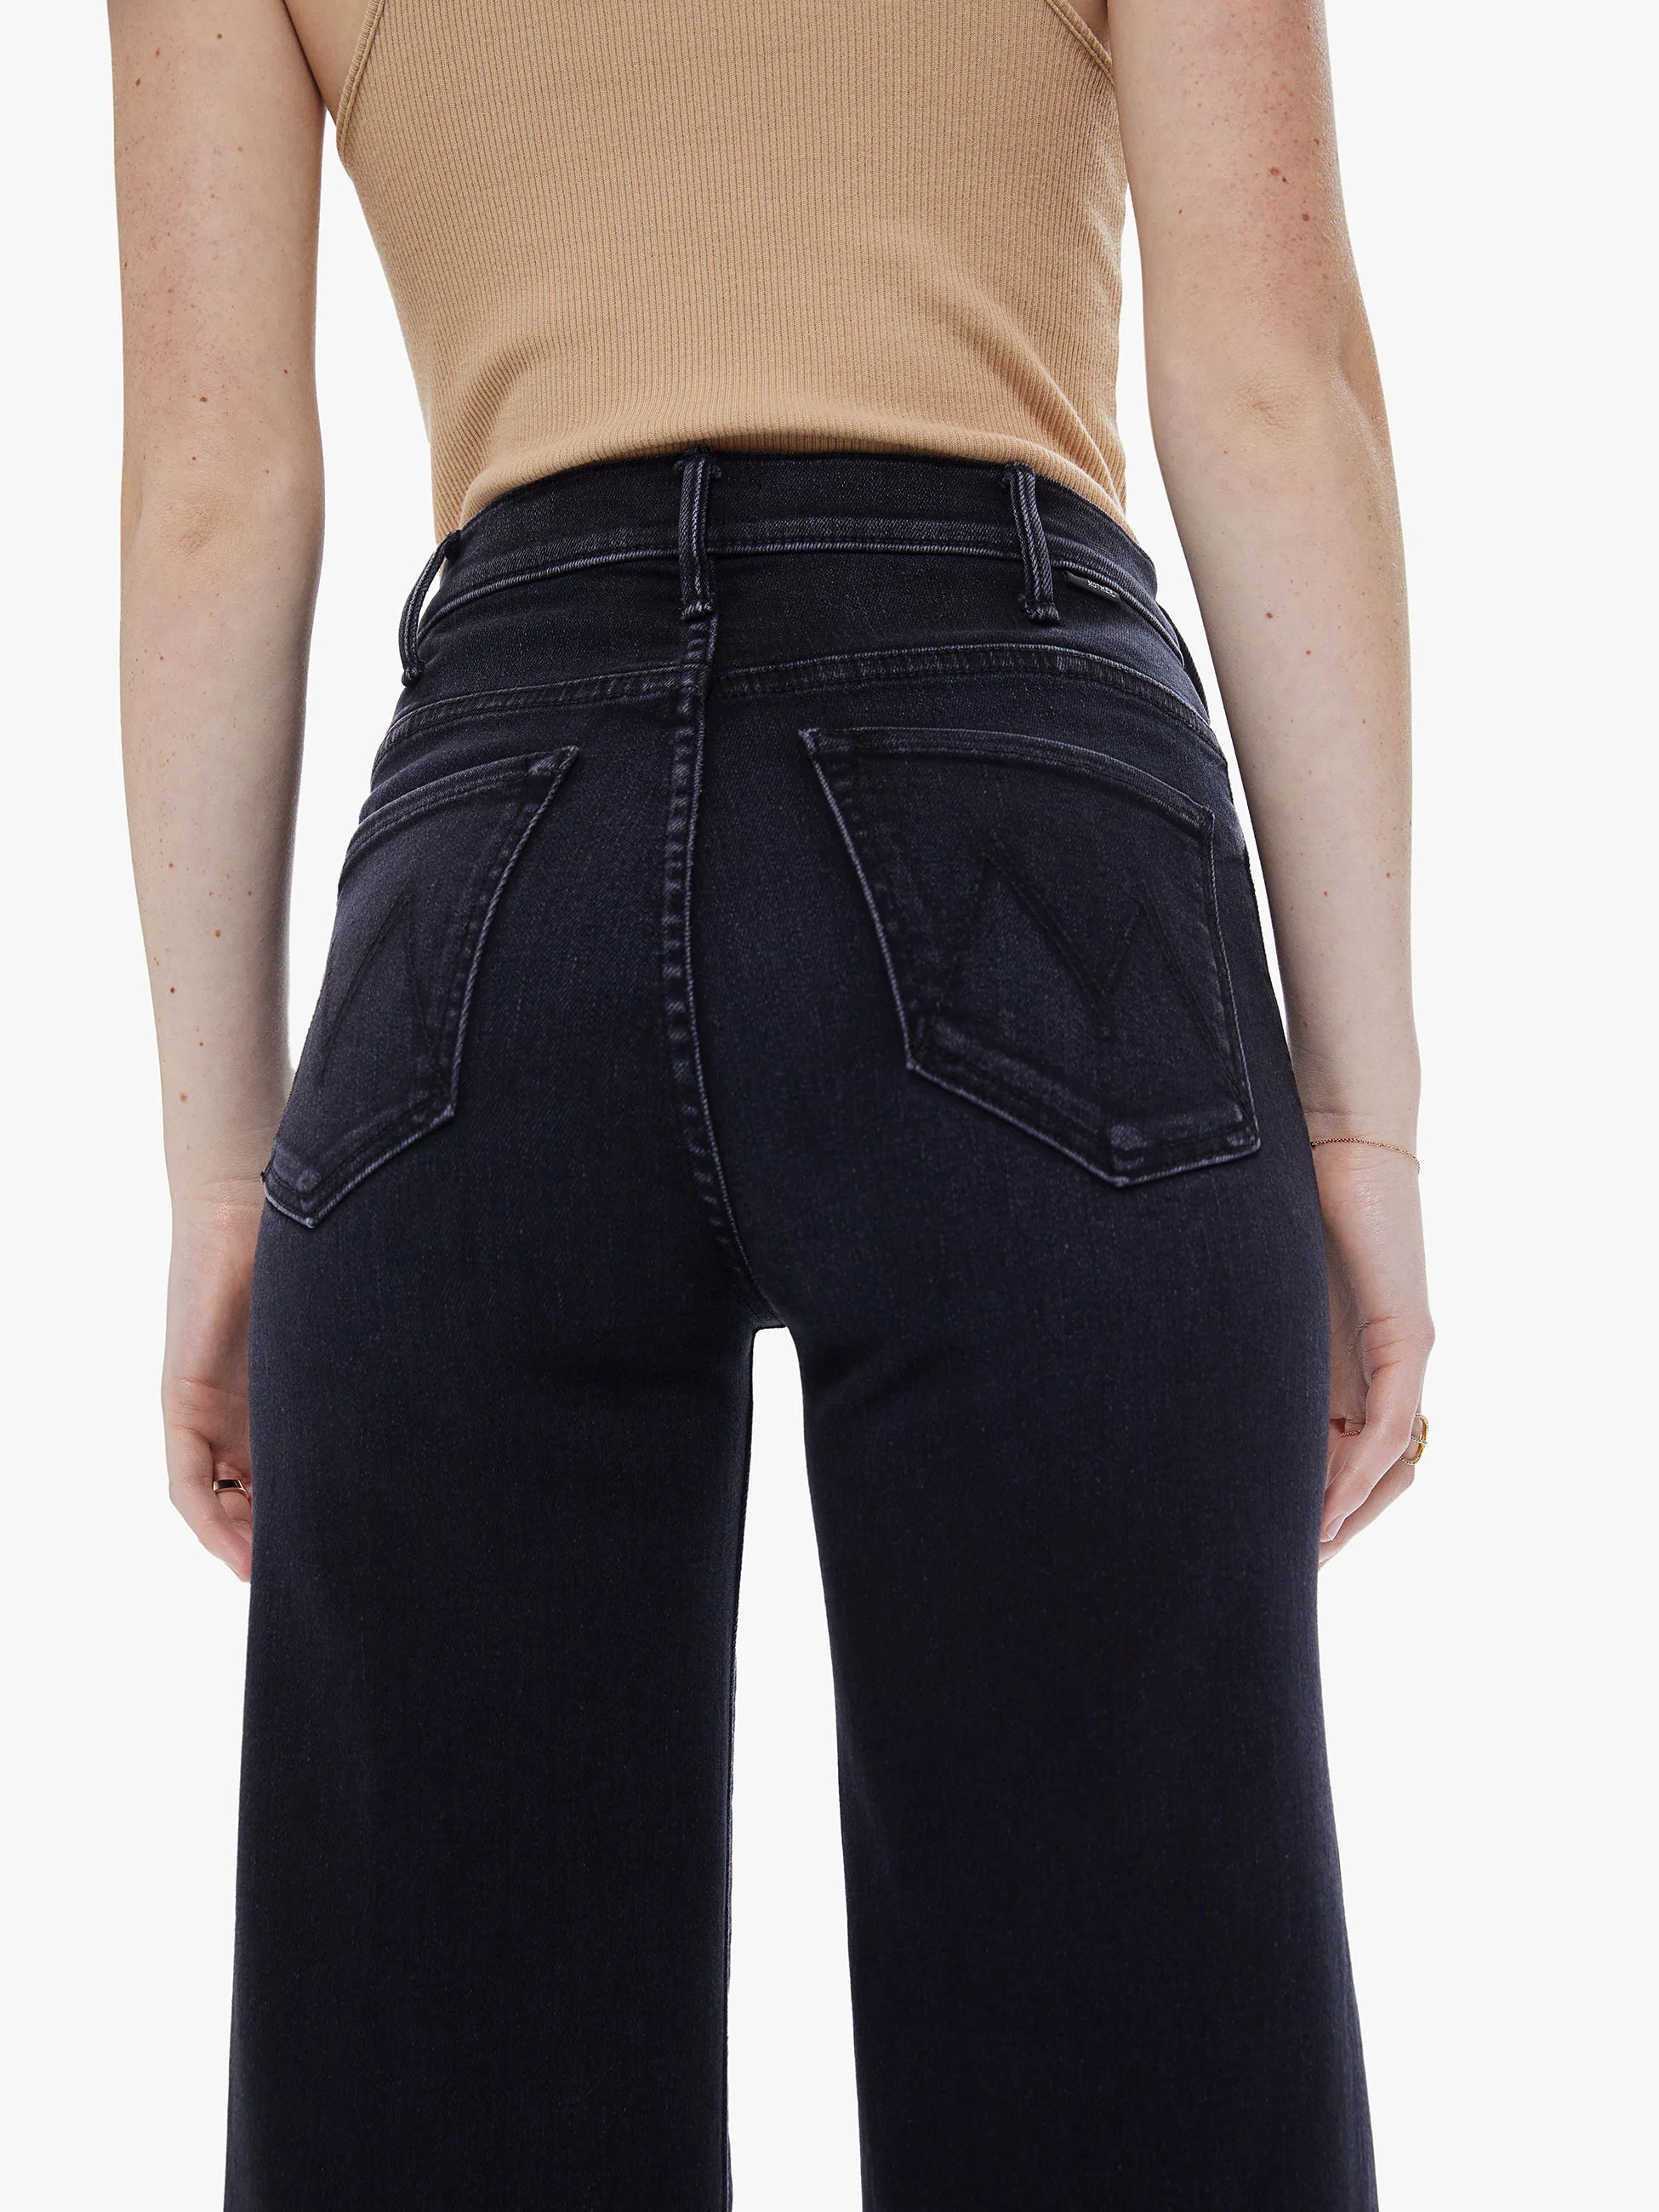 Schwarze Flare-Jeans mit hoher Taille